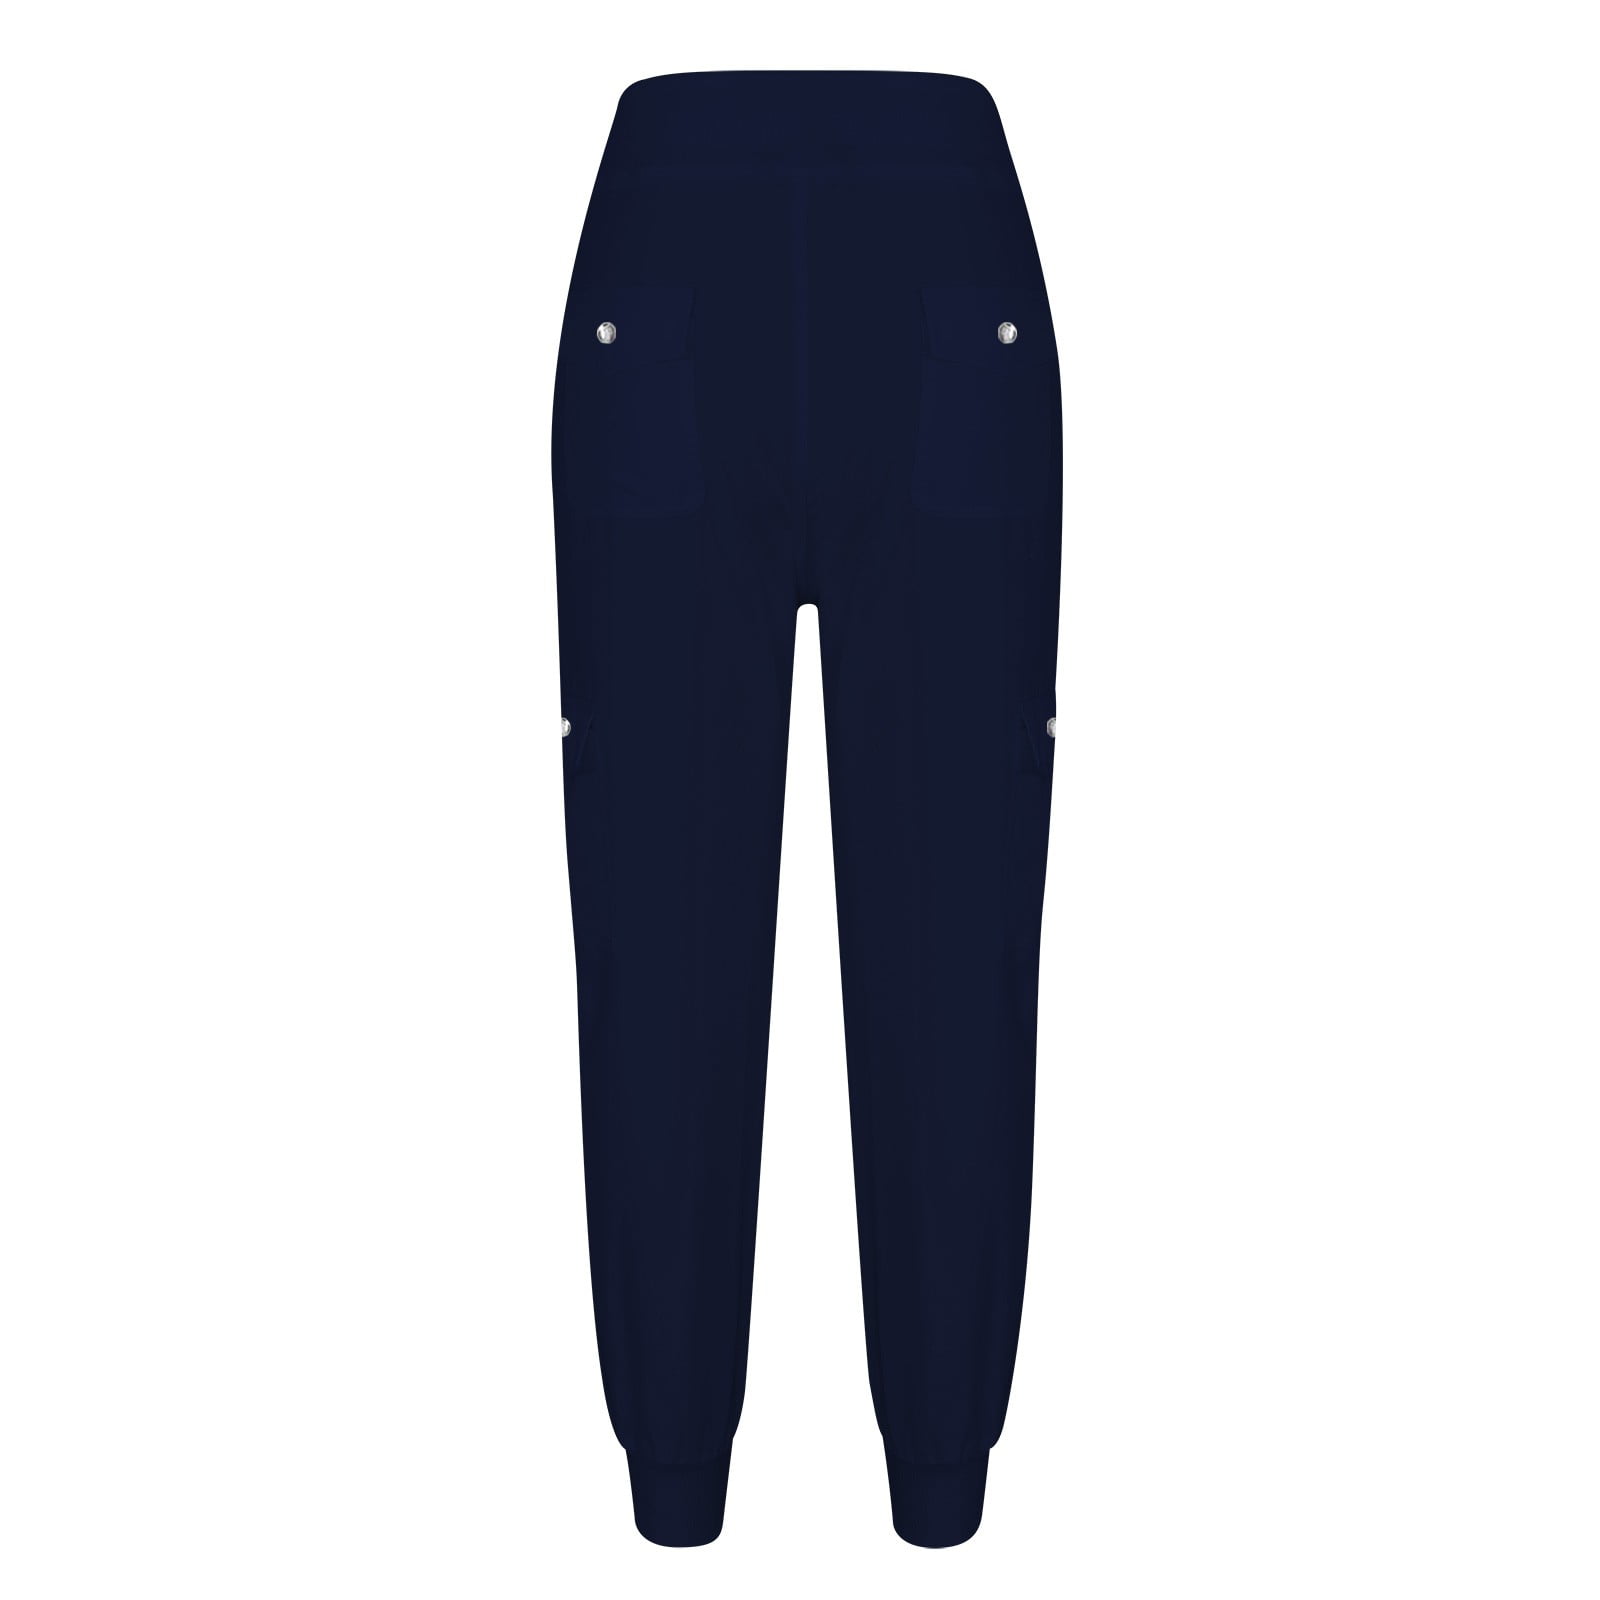 FAIWAD Cargo Pants for Women High Waist Elastic Butt Lifting Joggers  Sweatpants Lightweight Hiking Lounge Pants (Small, Pink) 